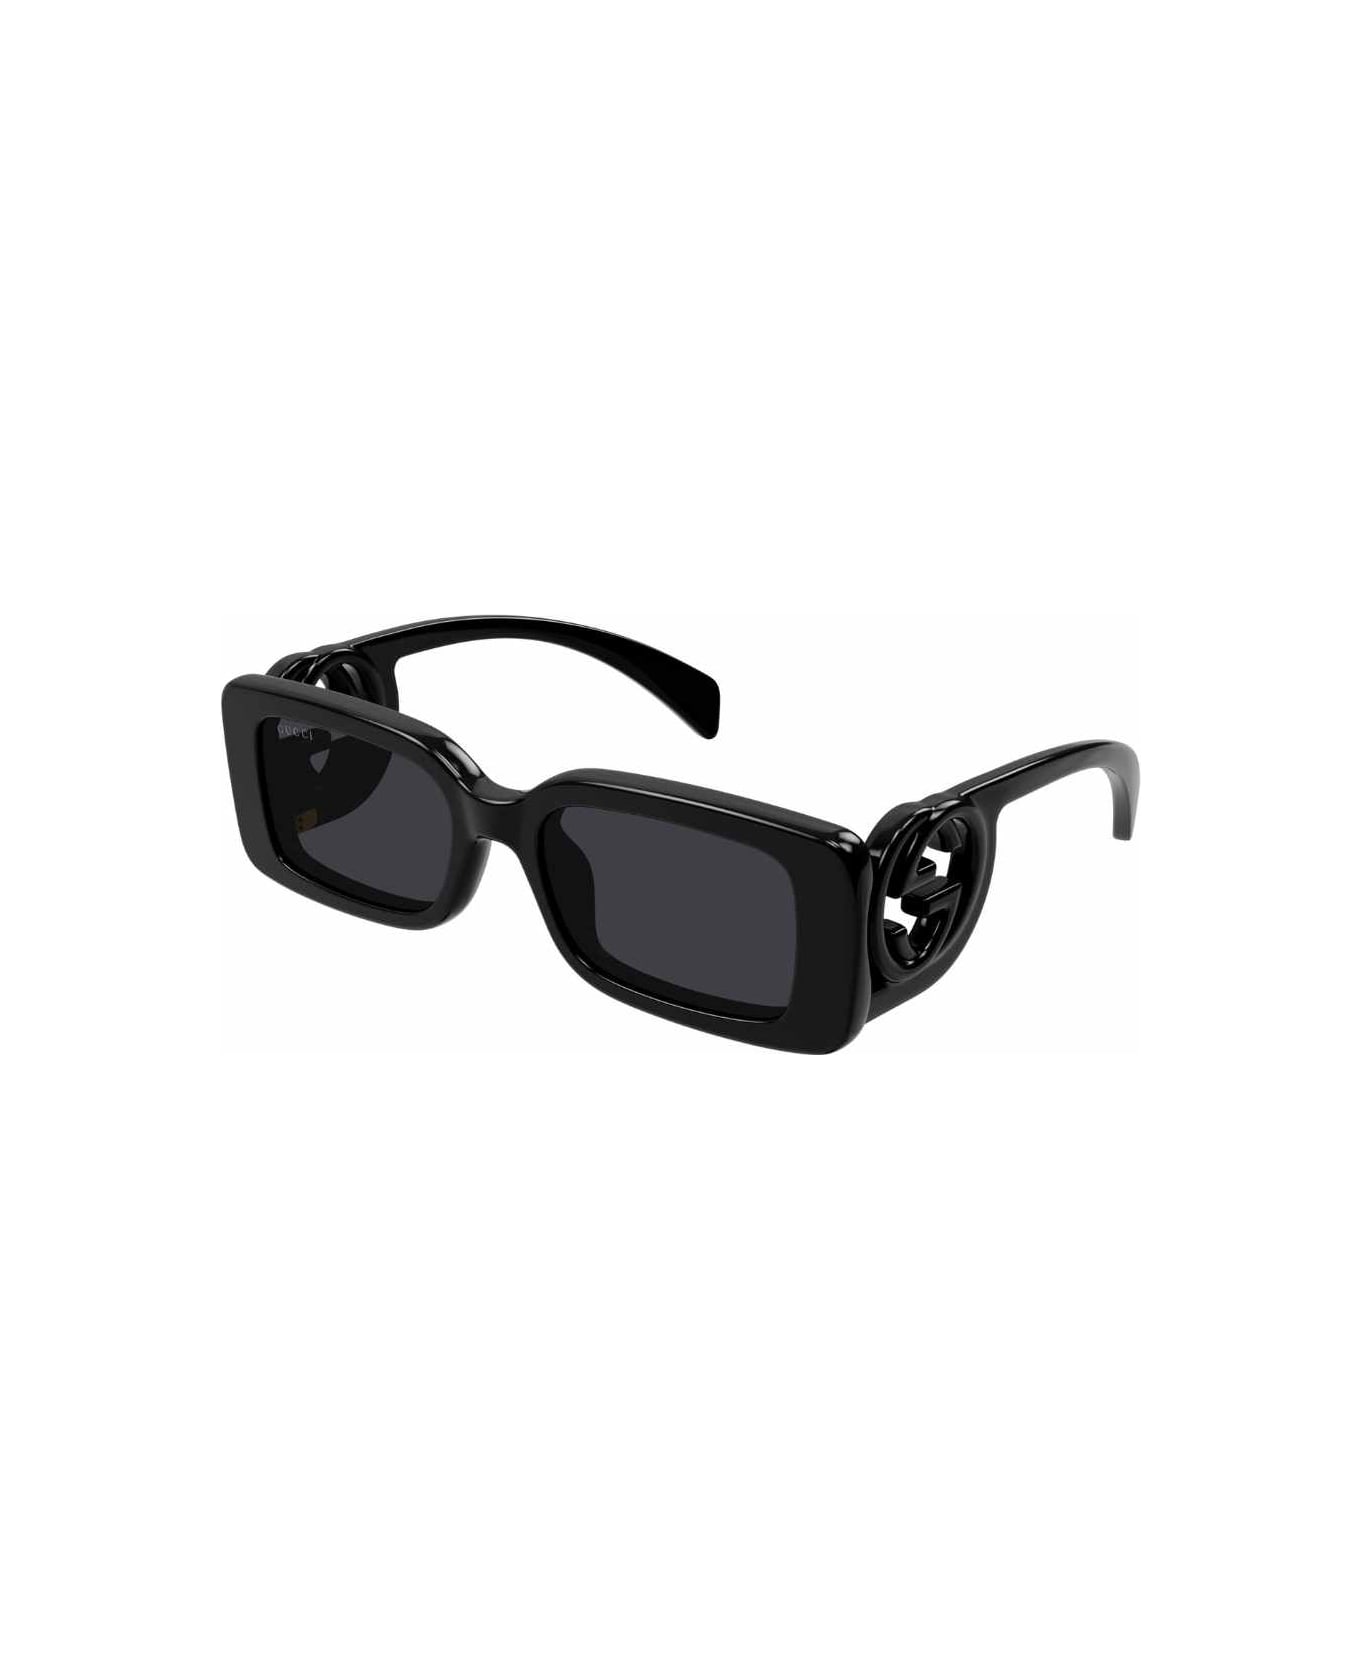 Gucci Eyewear Sunglasses - Nero/Nero